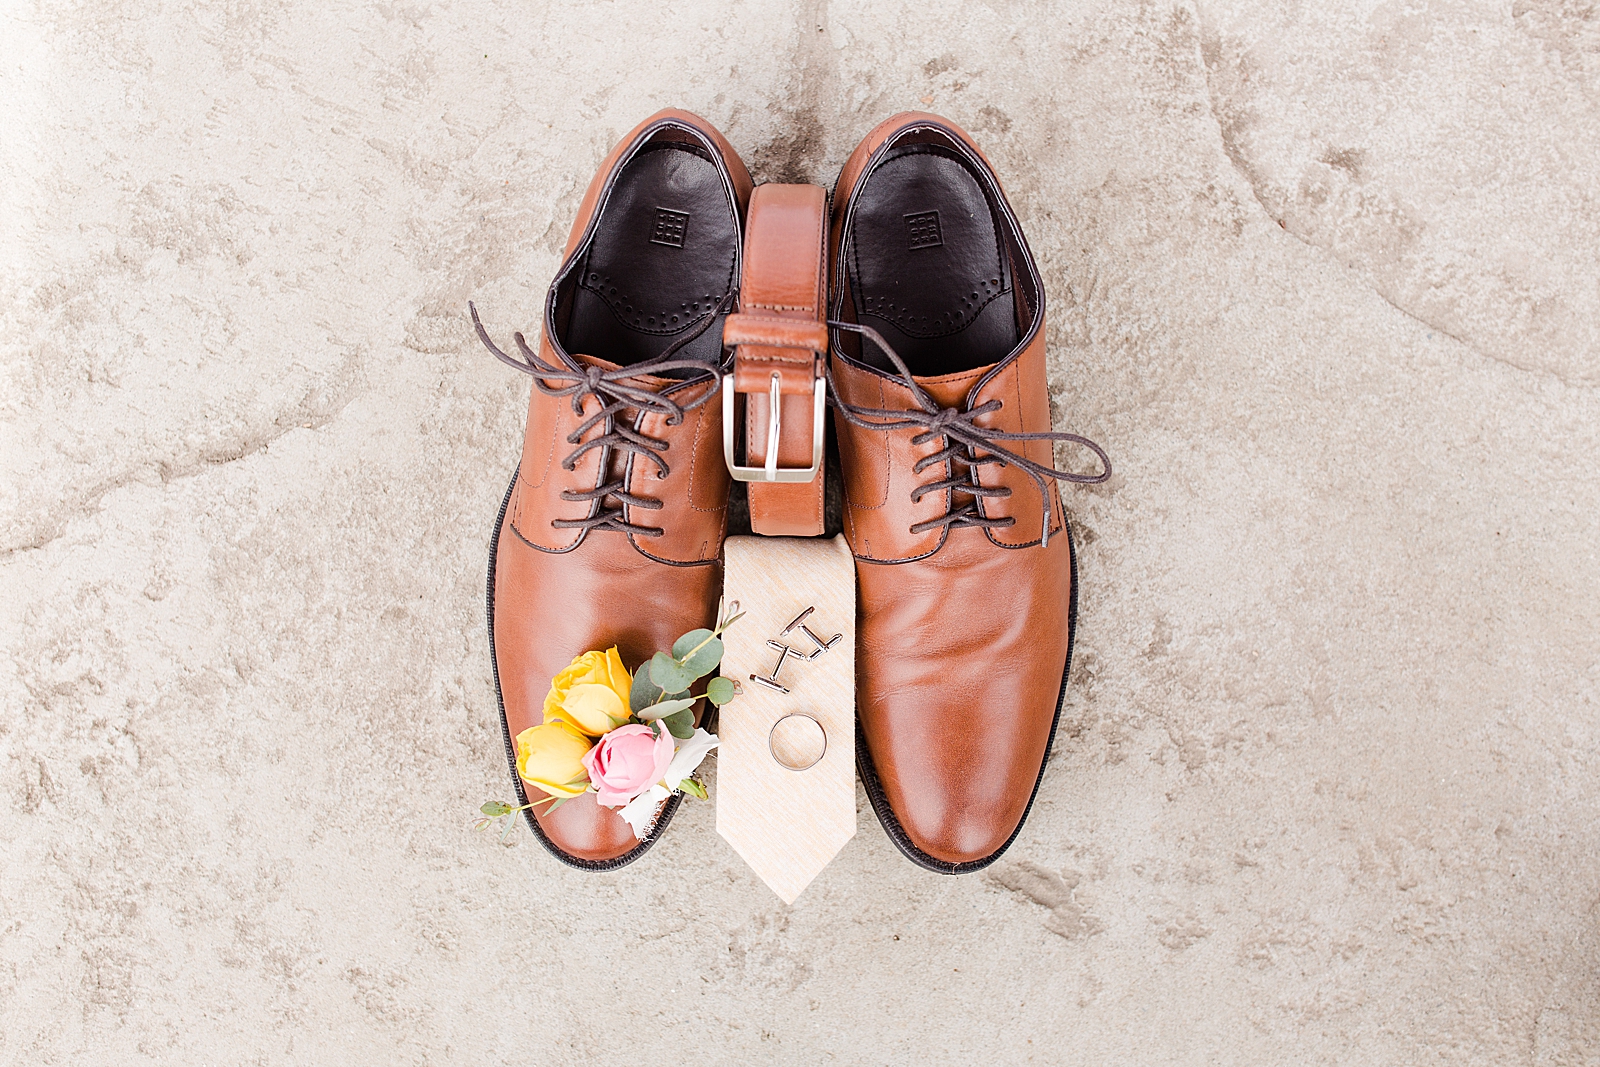 Hackney Warehouse Wedding Grooms Details Belt Tie Shoes Boutonniere on Concrete floor Photo